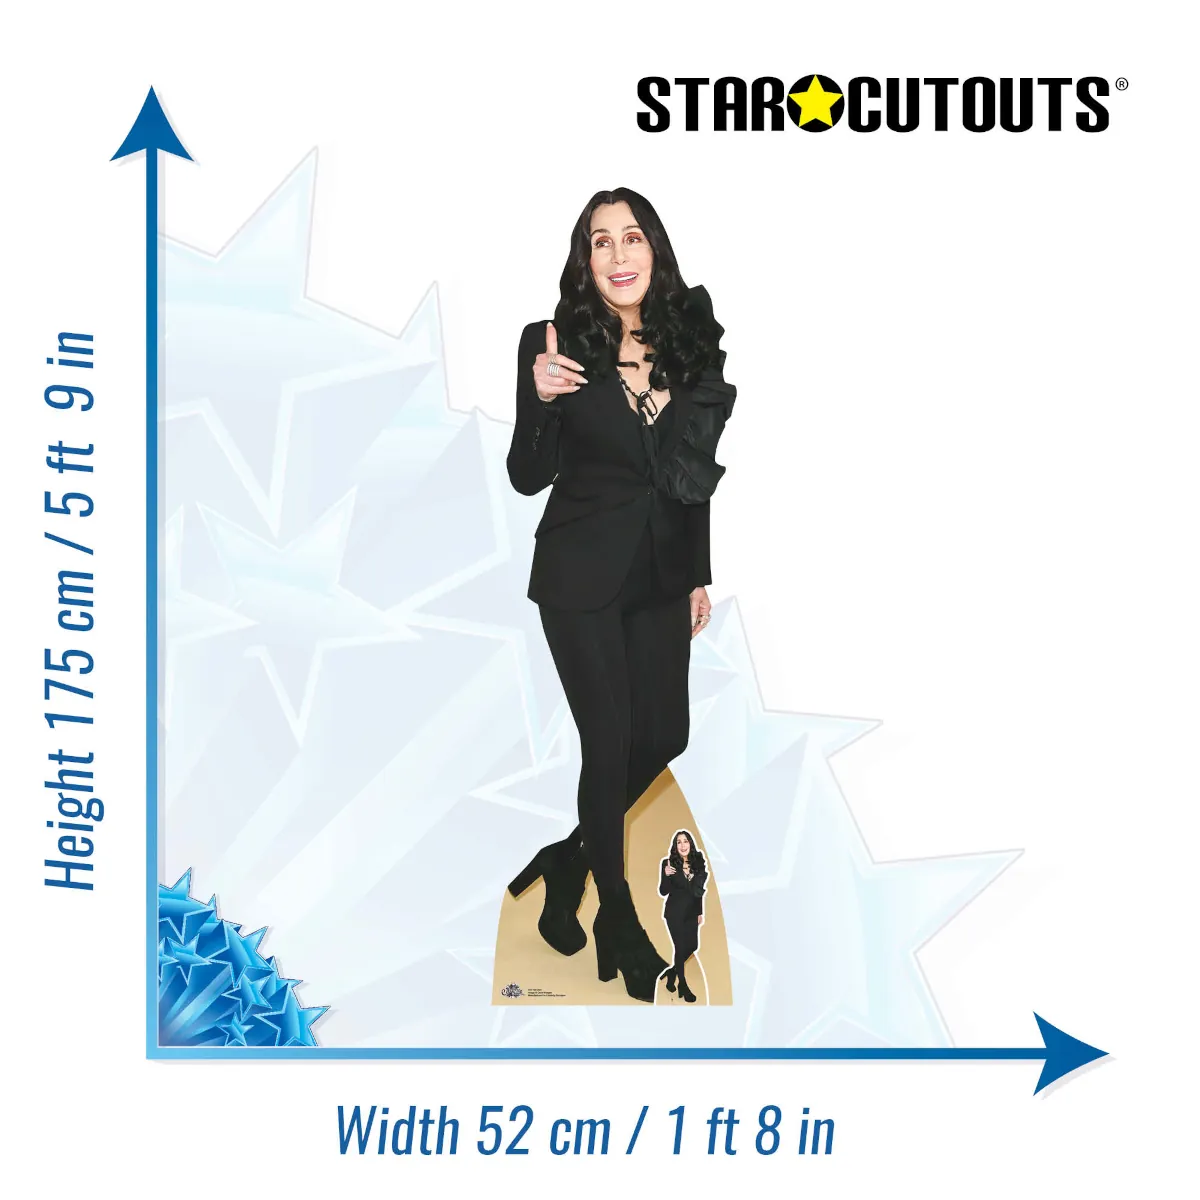 CS1184 Cher 'Thumbs Up' (American Singer) Lifesize + Mini Cardboard Cutout Standee Size